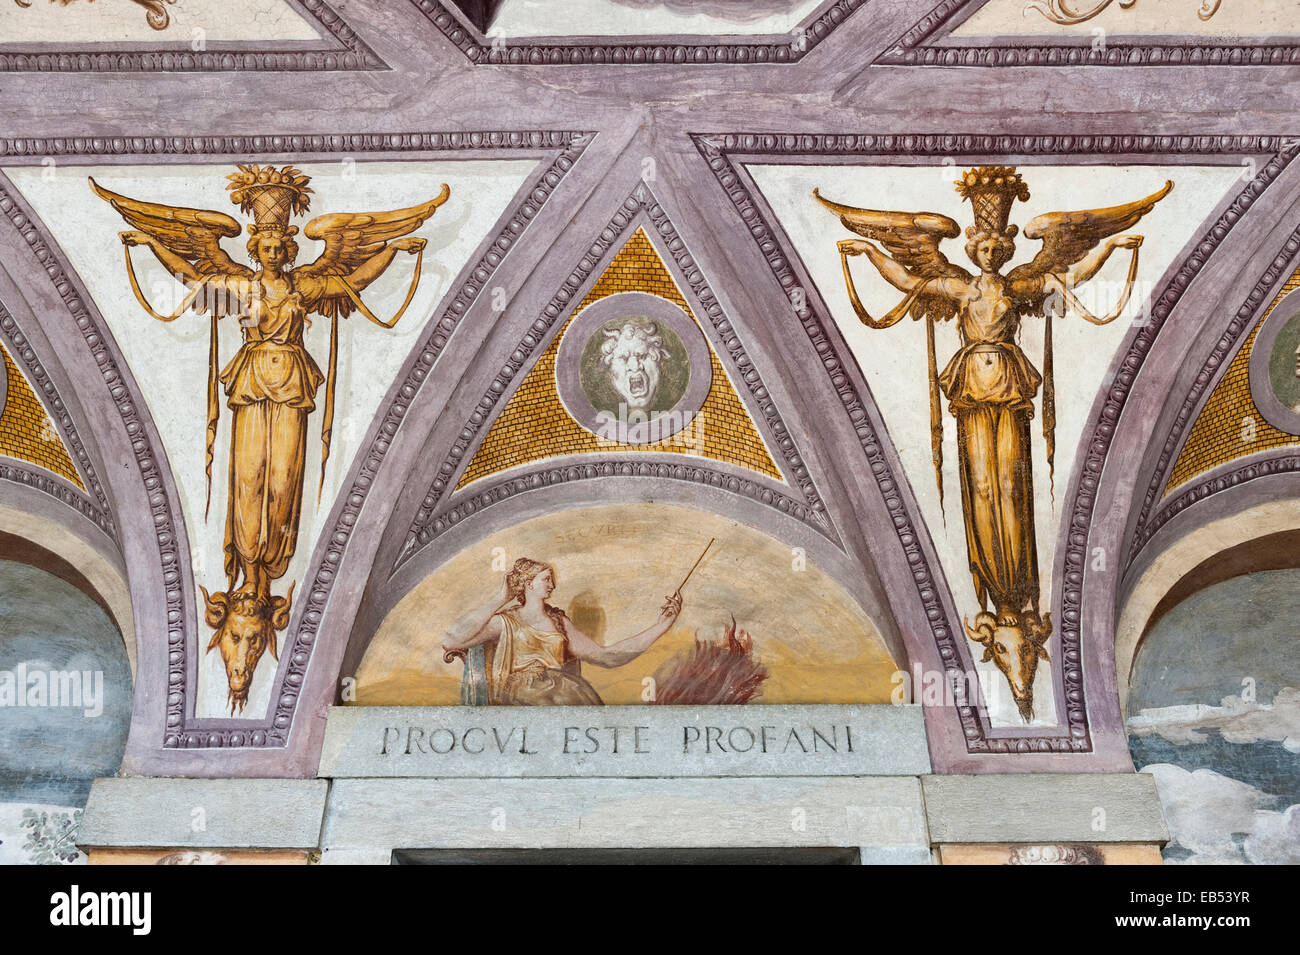 Villa Godi Malinverni, Vicenza, Italy. The frescoed entrance hall with a line from Virgil - 'keep away, you profane ones' Stock Photo